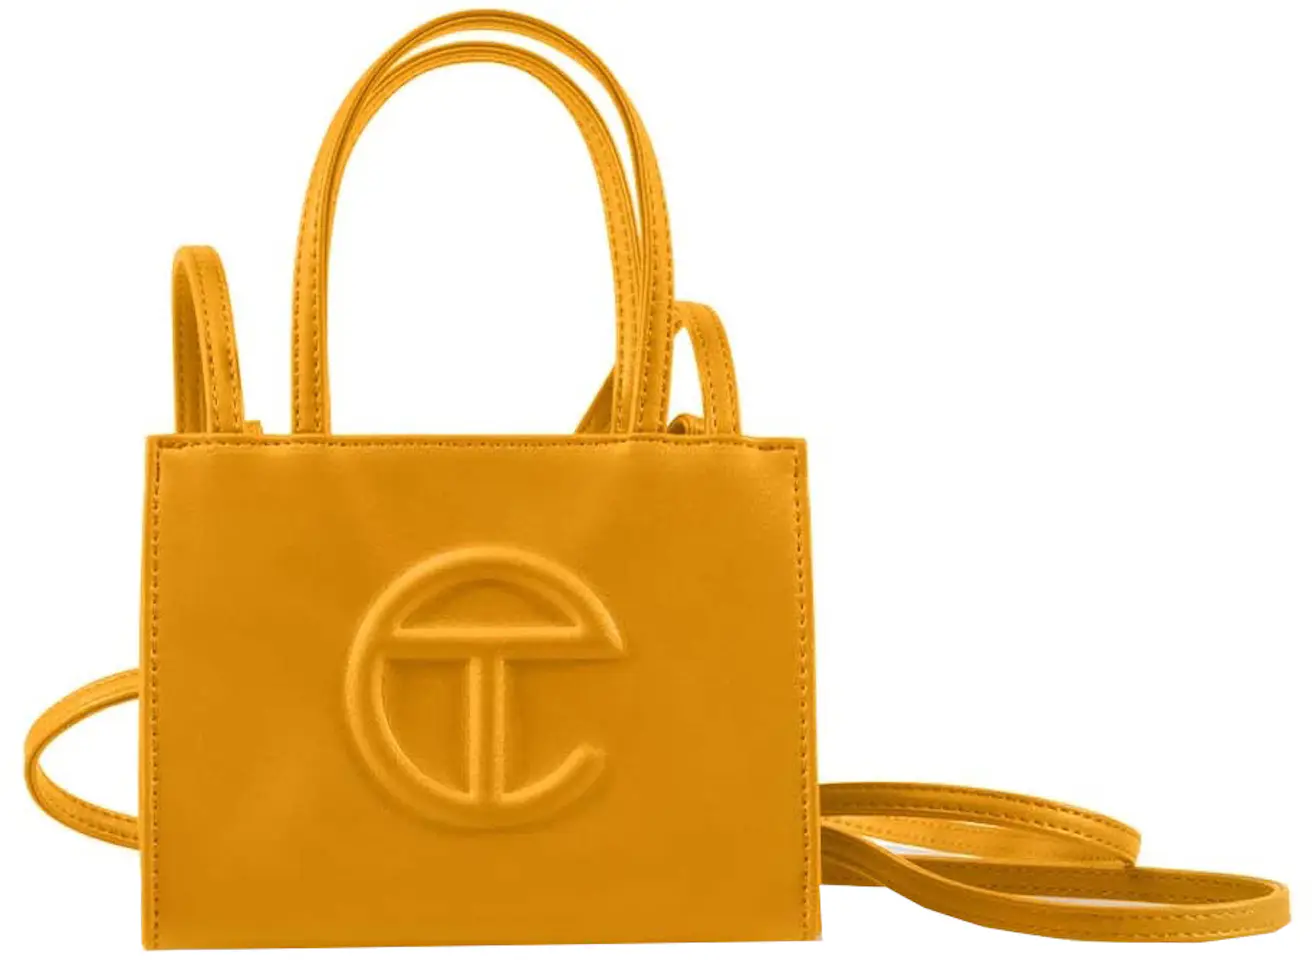 Telfar Shopping Bag Small Mustard in Vegan Leather - US